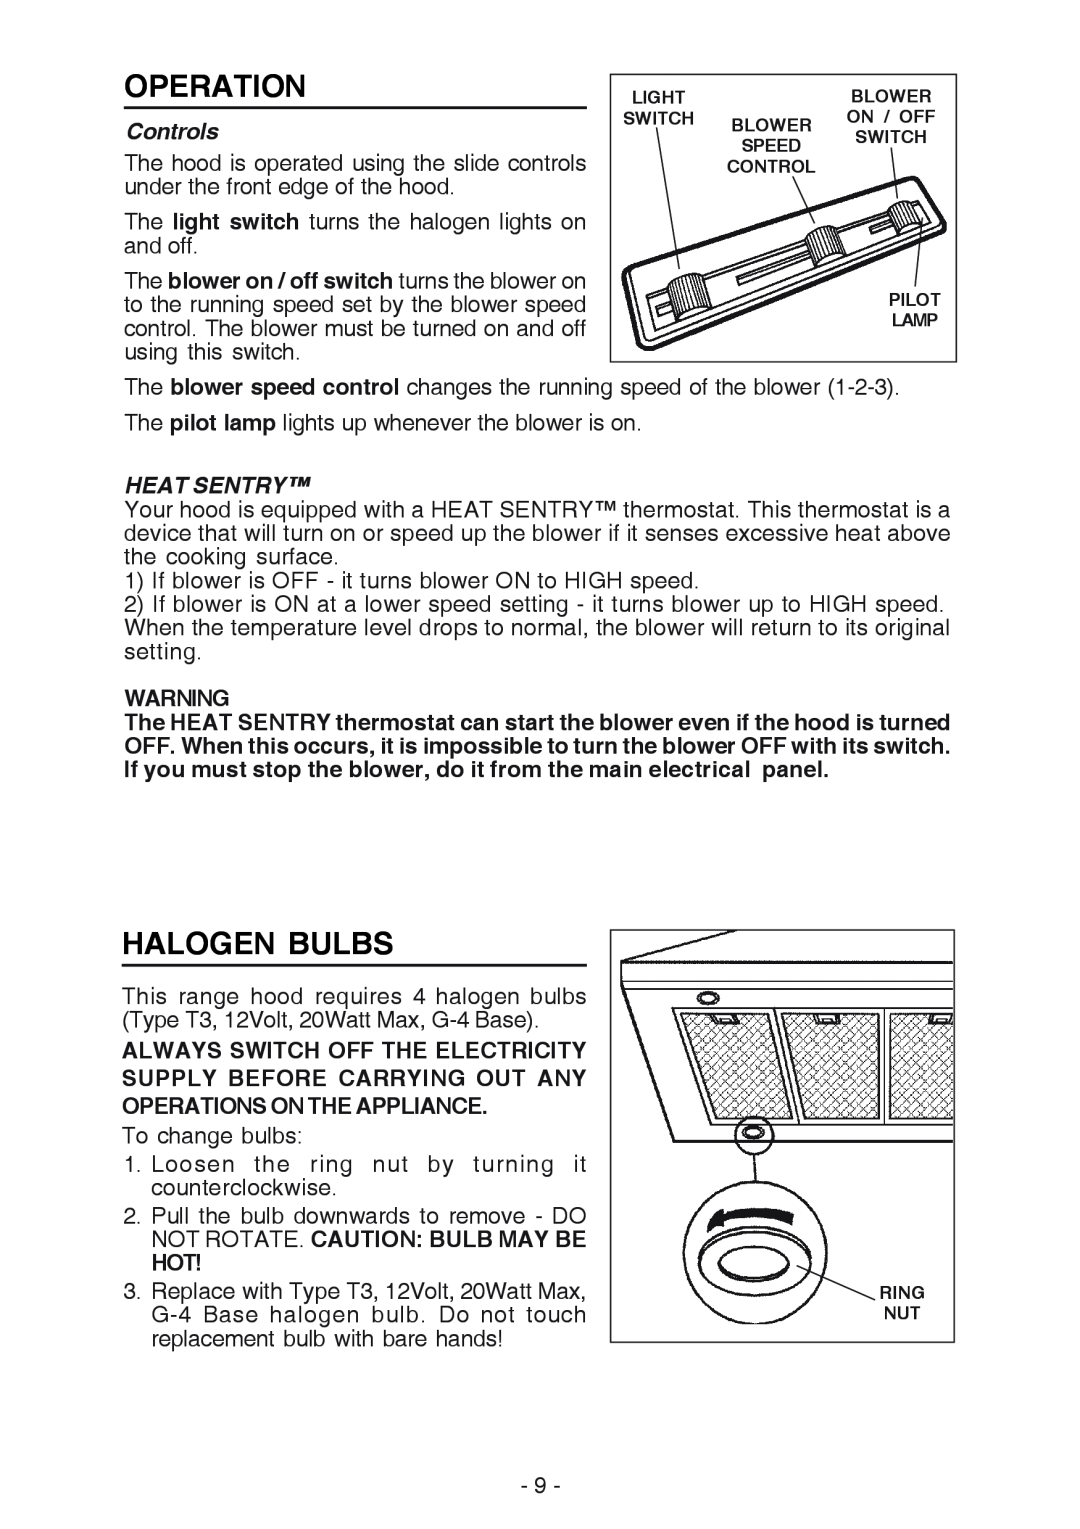 NuTone NP63000 manual Operation, Halogen Bulbs, Controls, Heat Sentry 